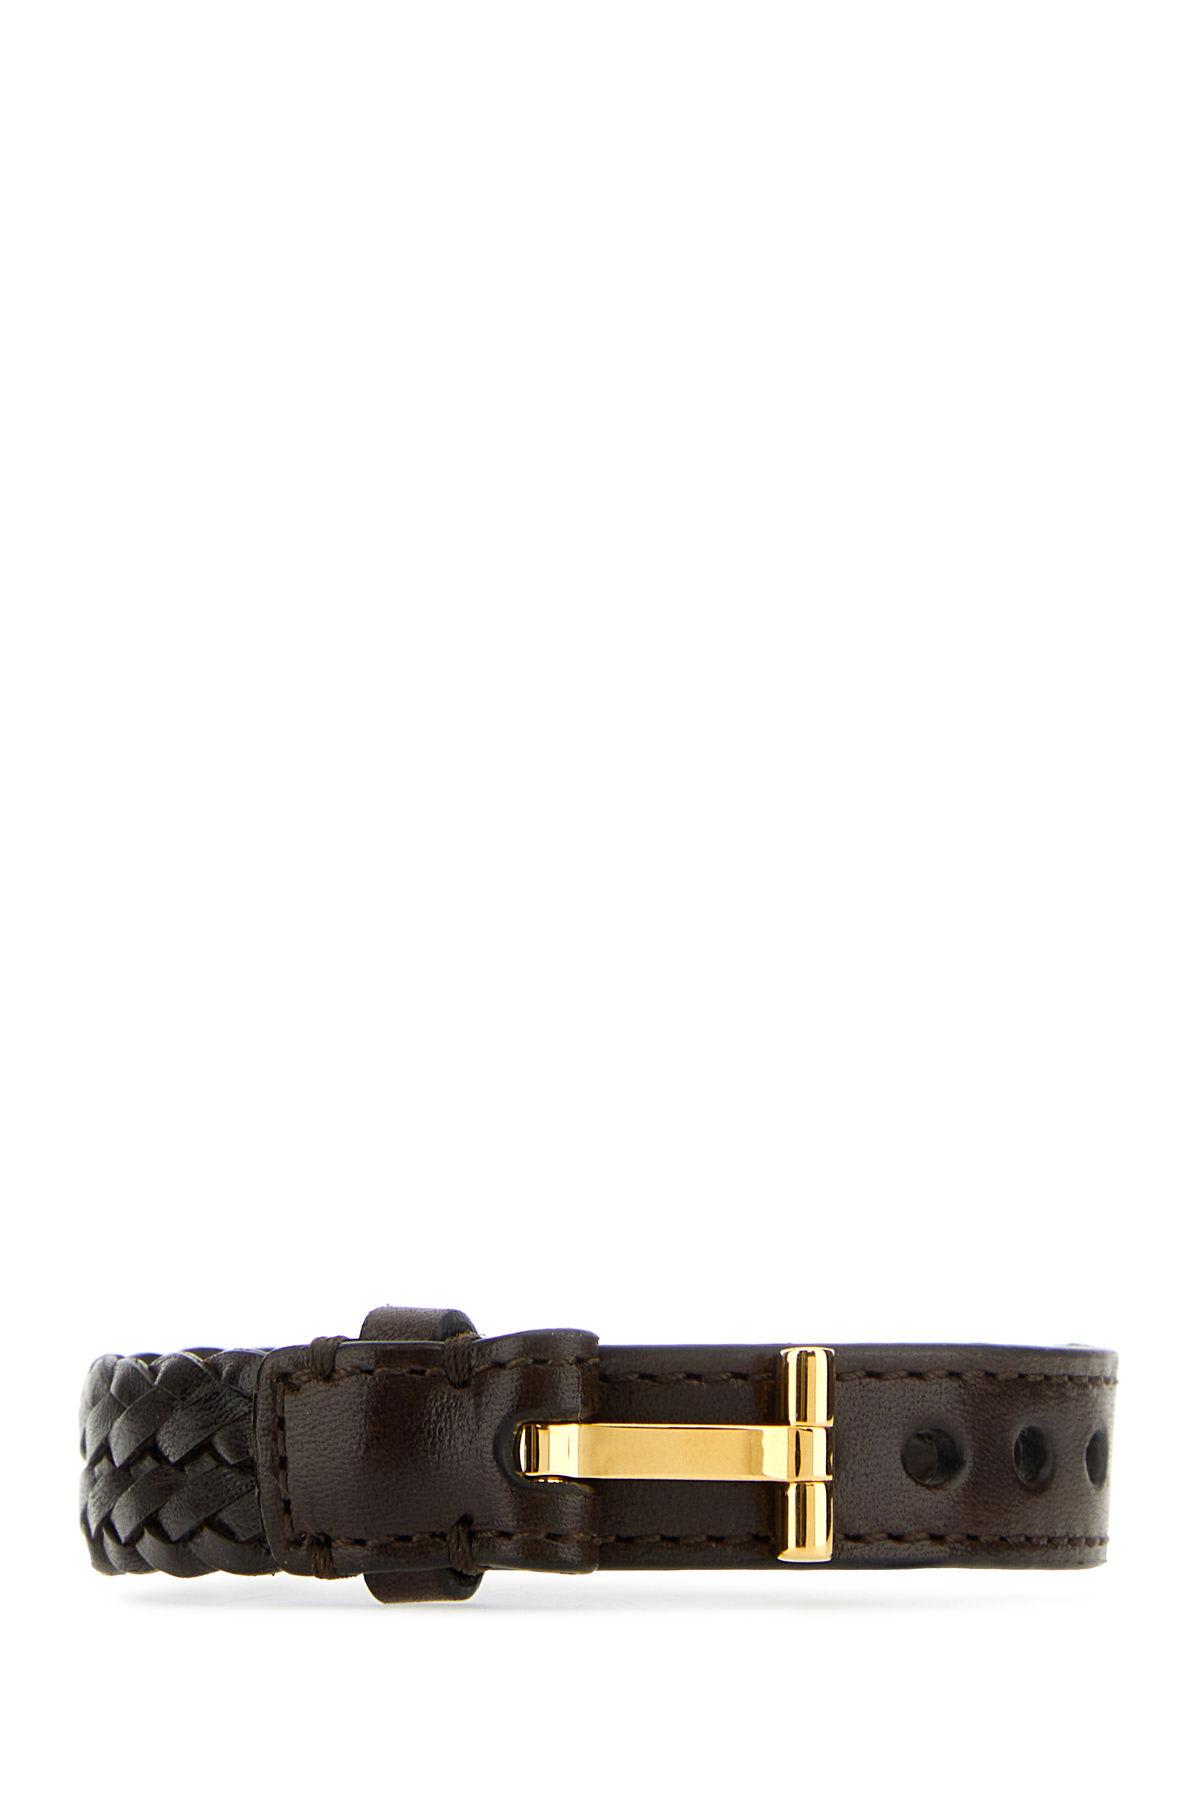 Dark Brown Leather Bracelet